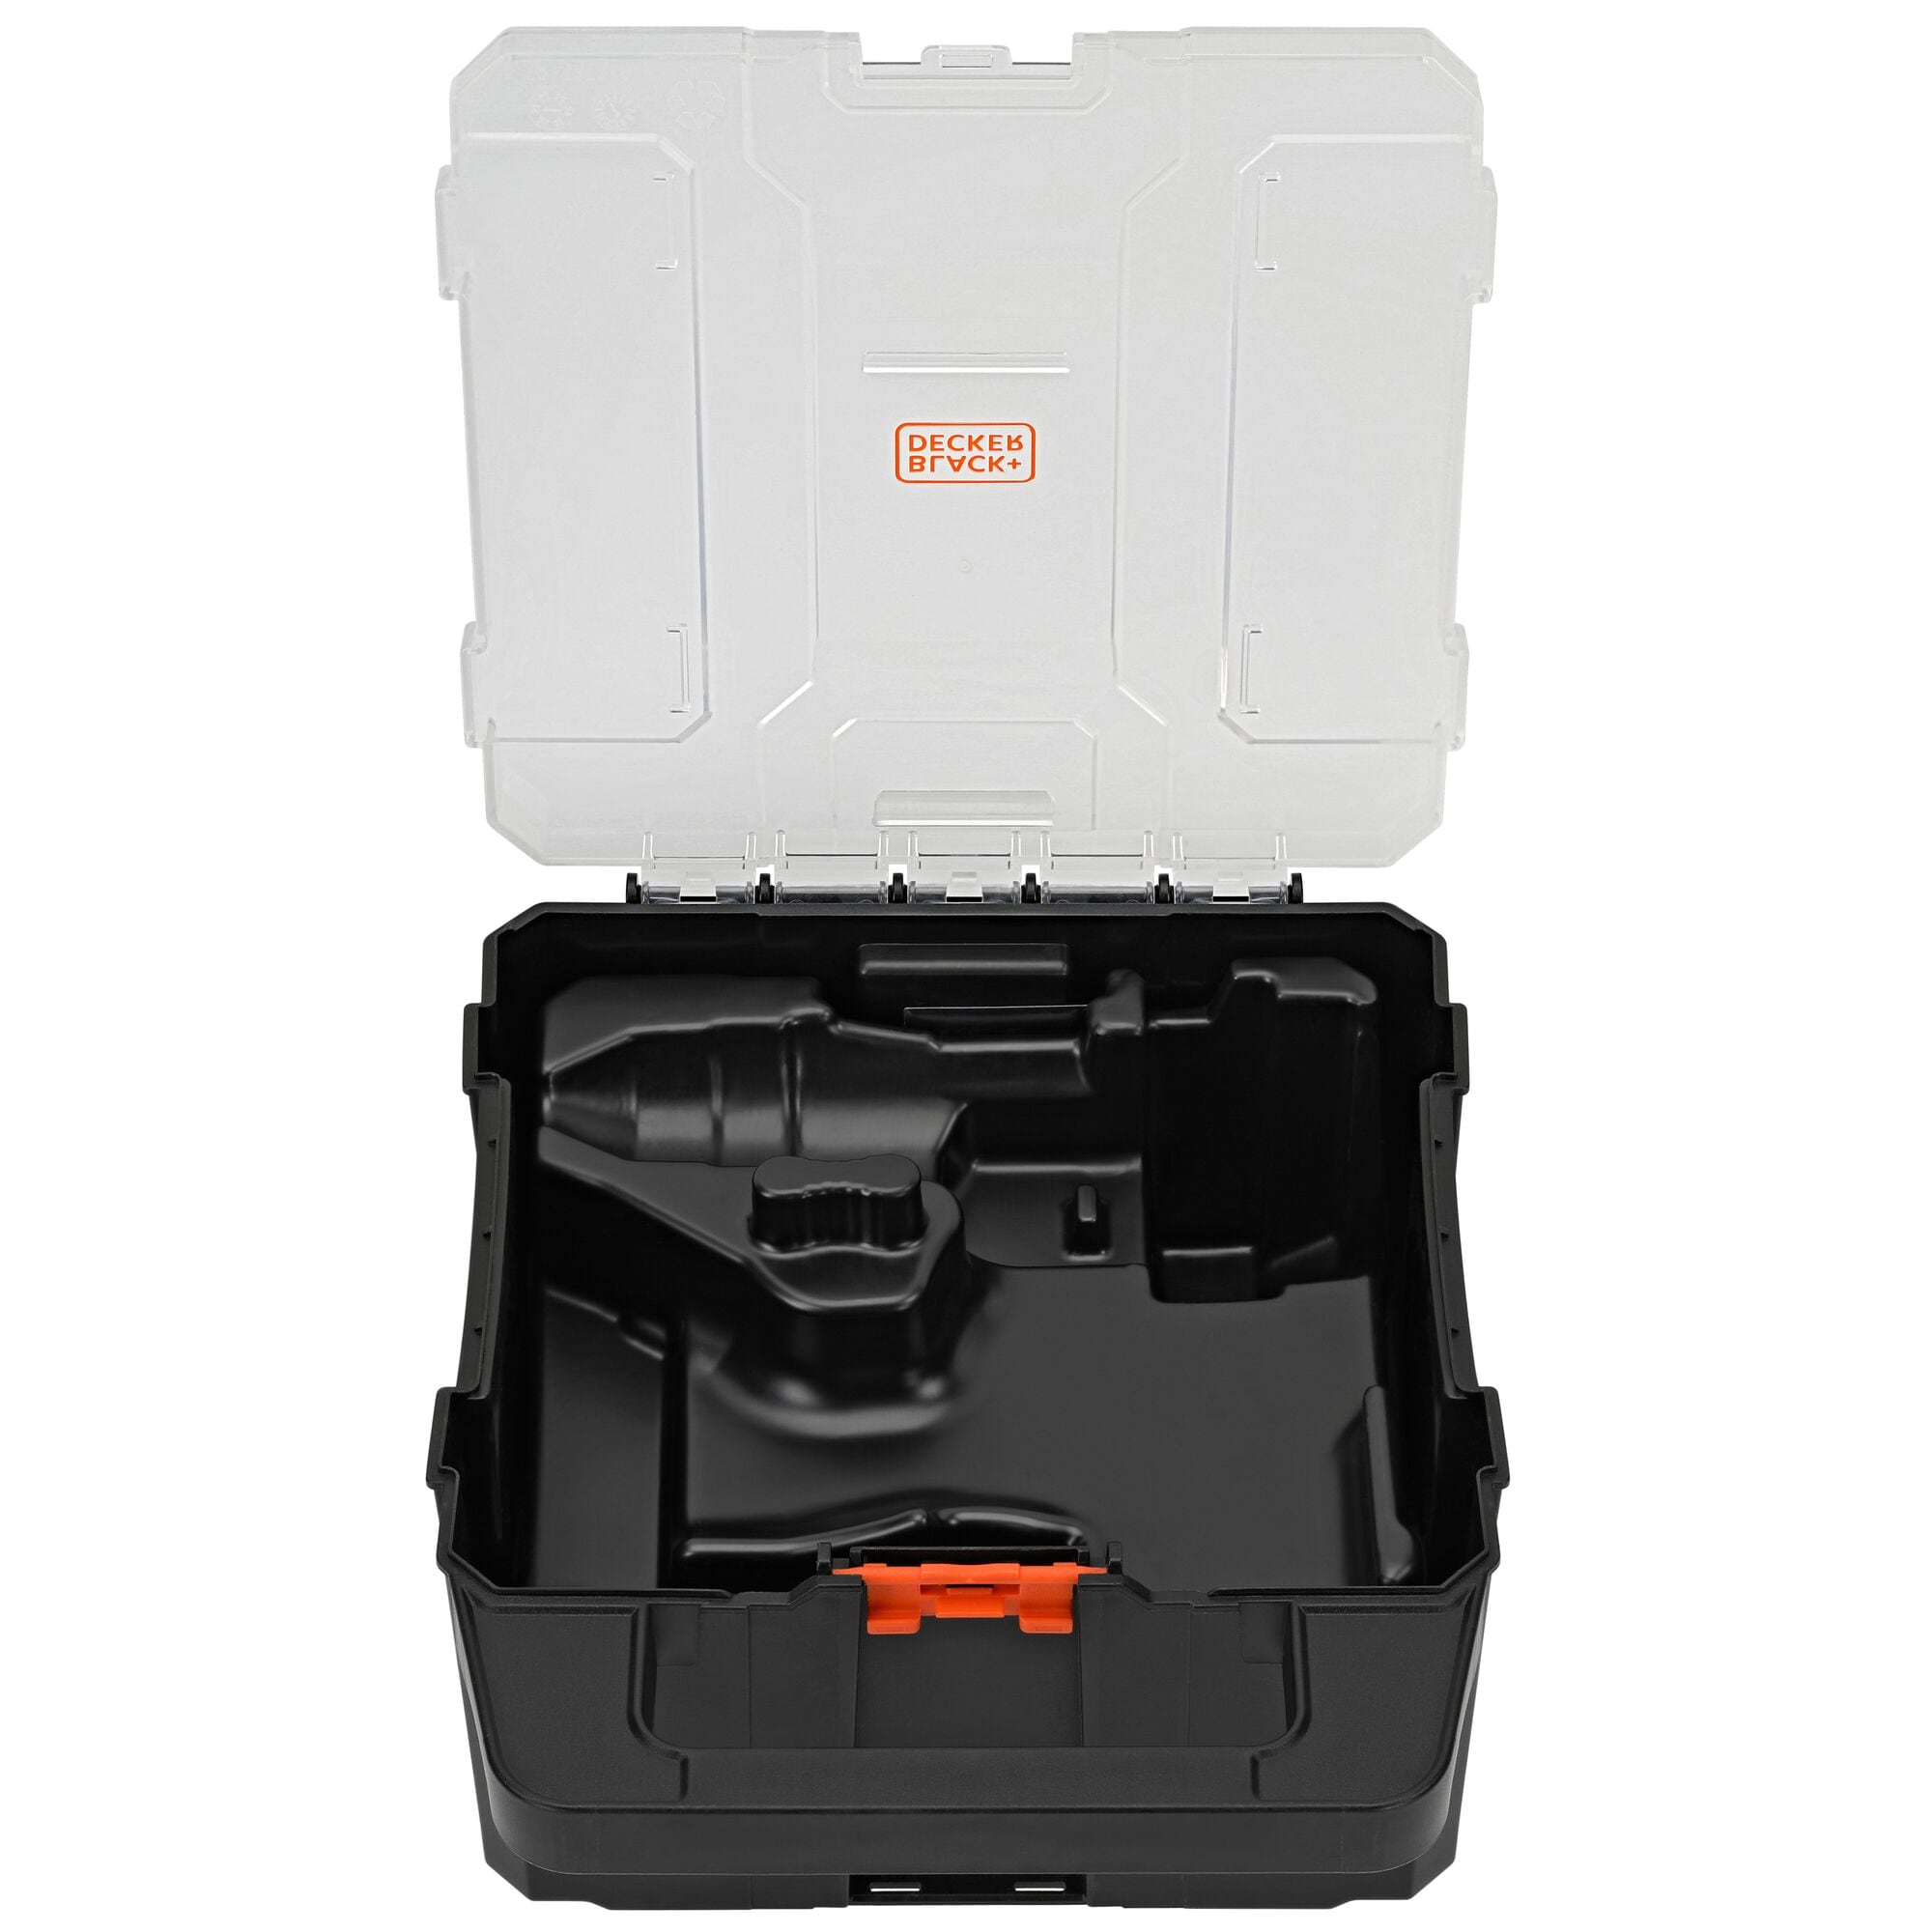 MATRIX™ 20V MAX* Power Tool Kit, Includes Cordless Drill, 8 Attachments and  Storage Case | BLACK+DECKER